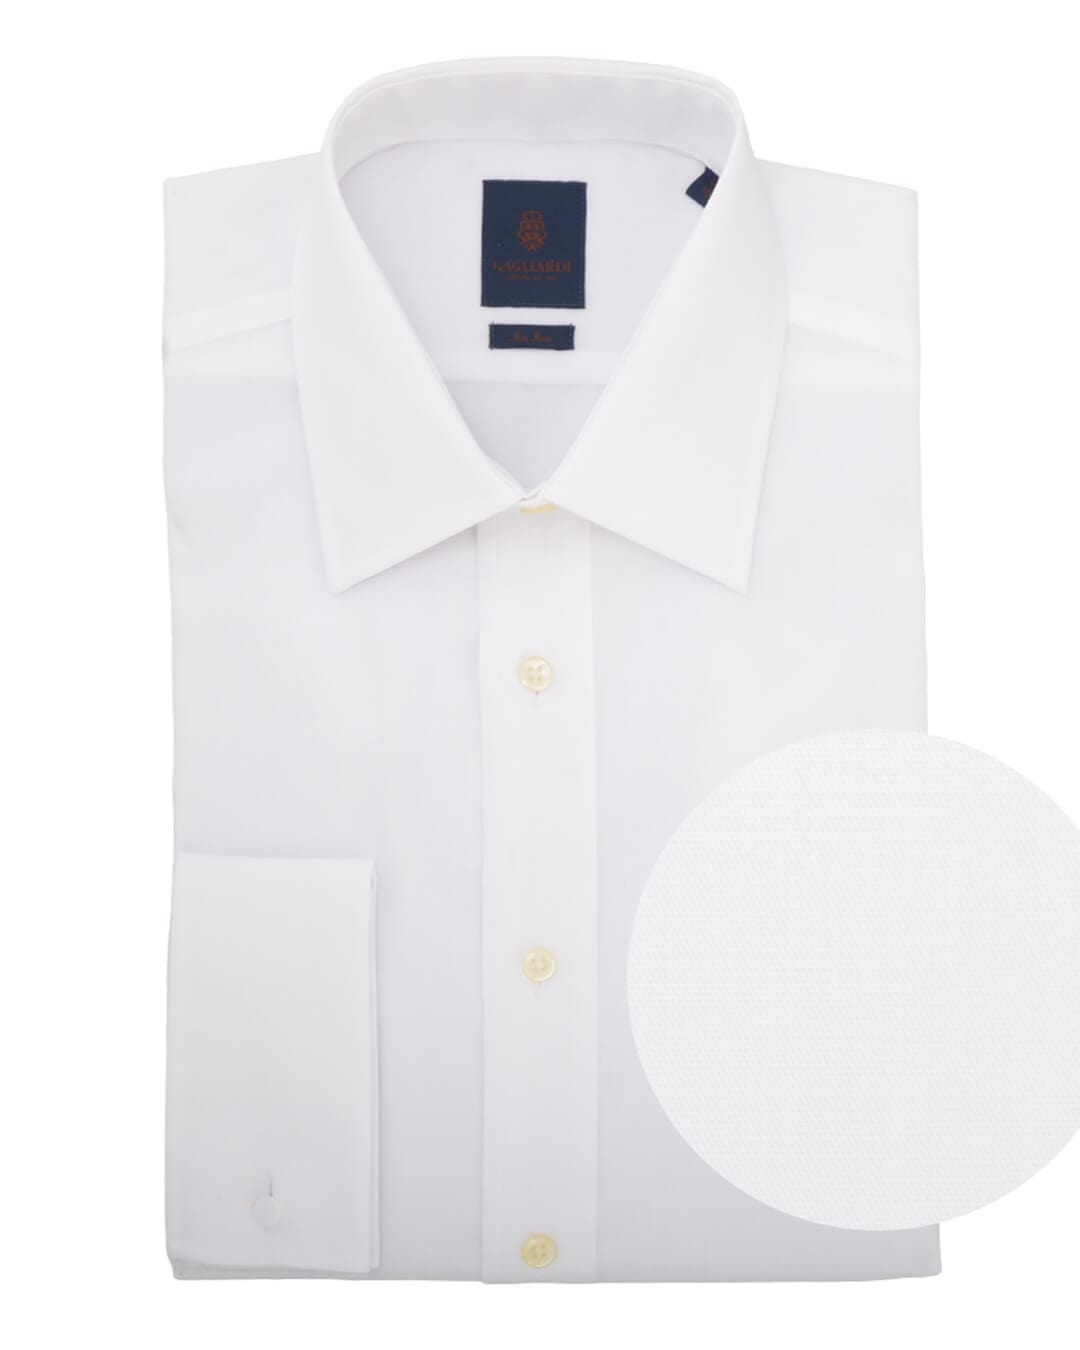 Gagliardi Shirts Gagliardi Tailored Fit White Poplin Cutaway Collar Non-iron Shirt